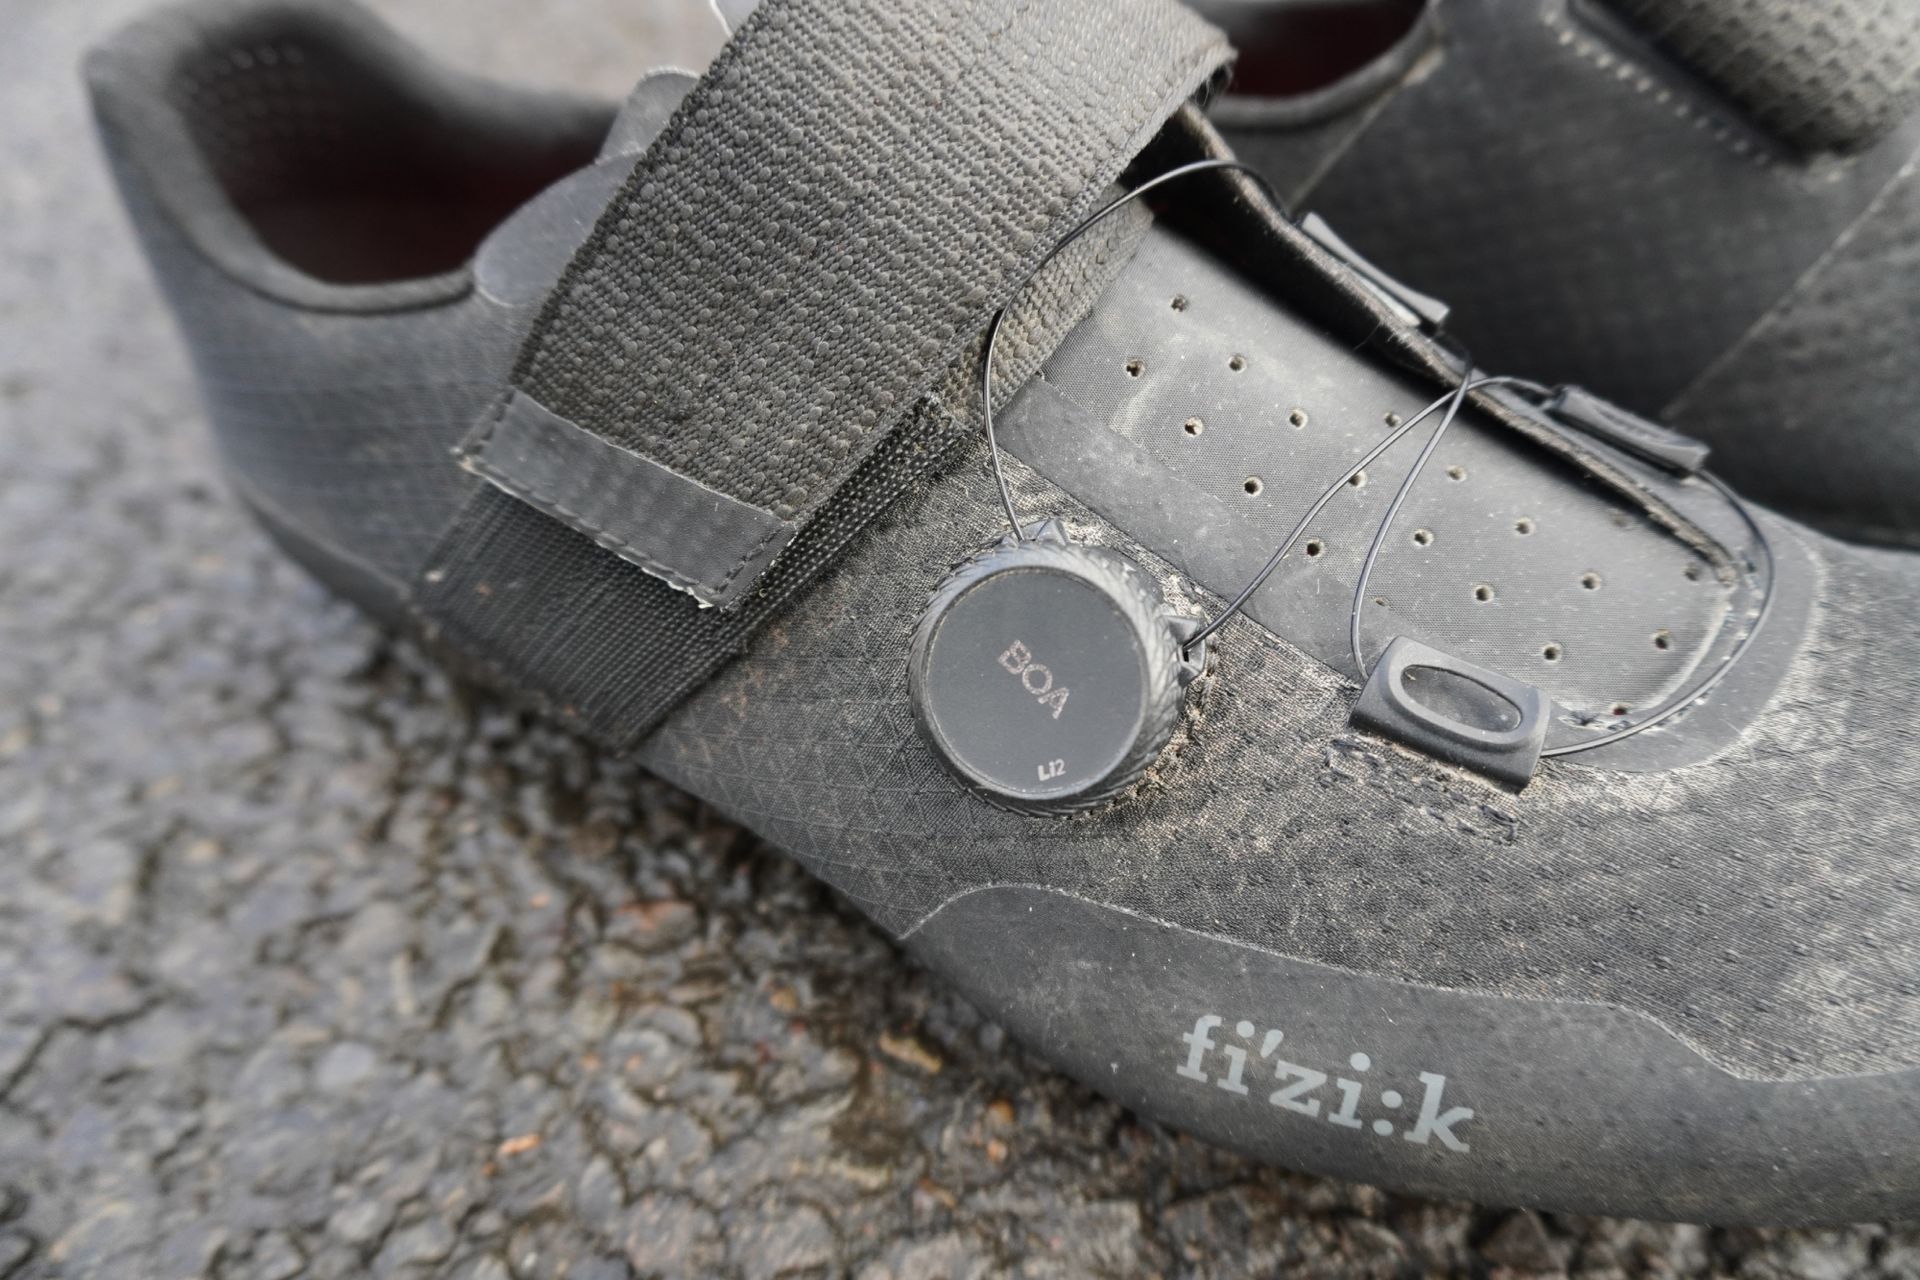 Fizik Vento Ferox Carbon review - super robust gravel bike shoes with